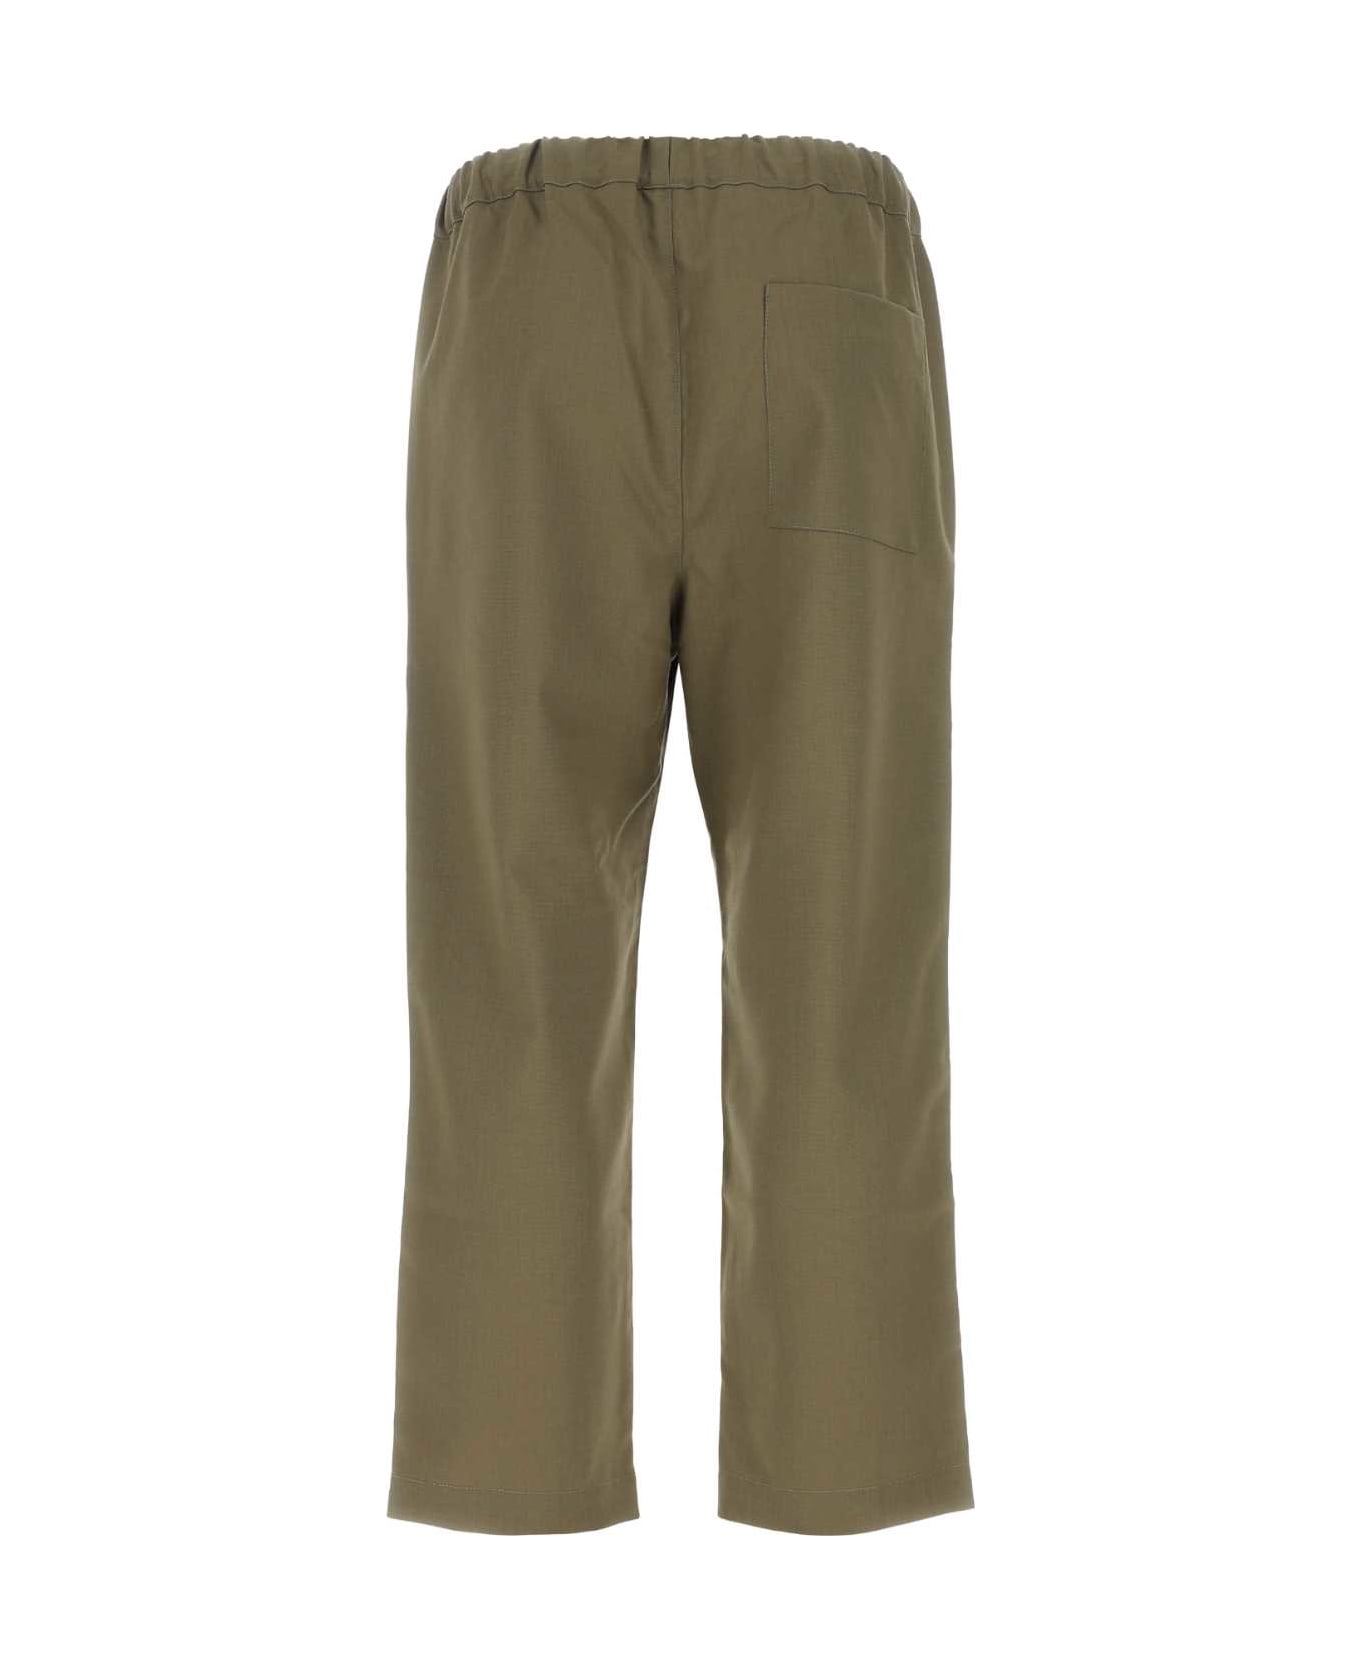 OAMC Military Green Wool Pant - Brown ボトムス